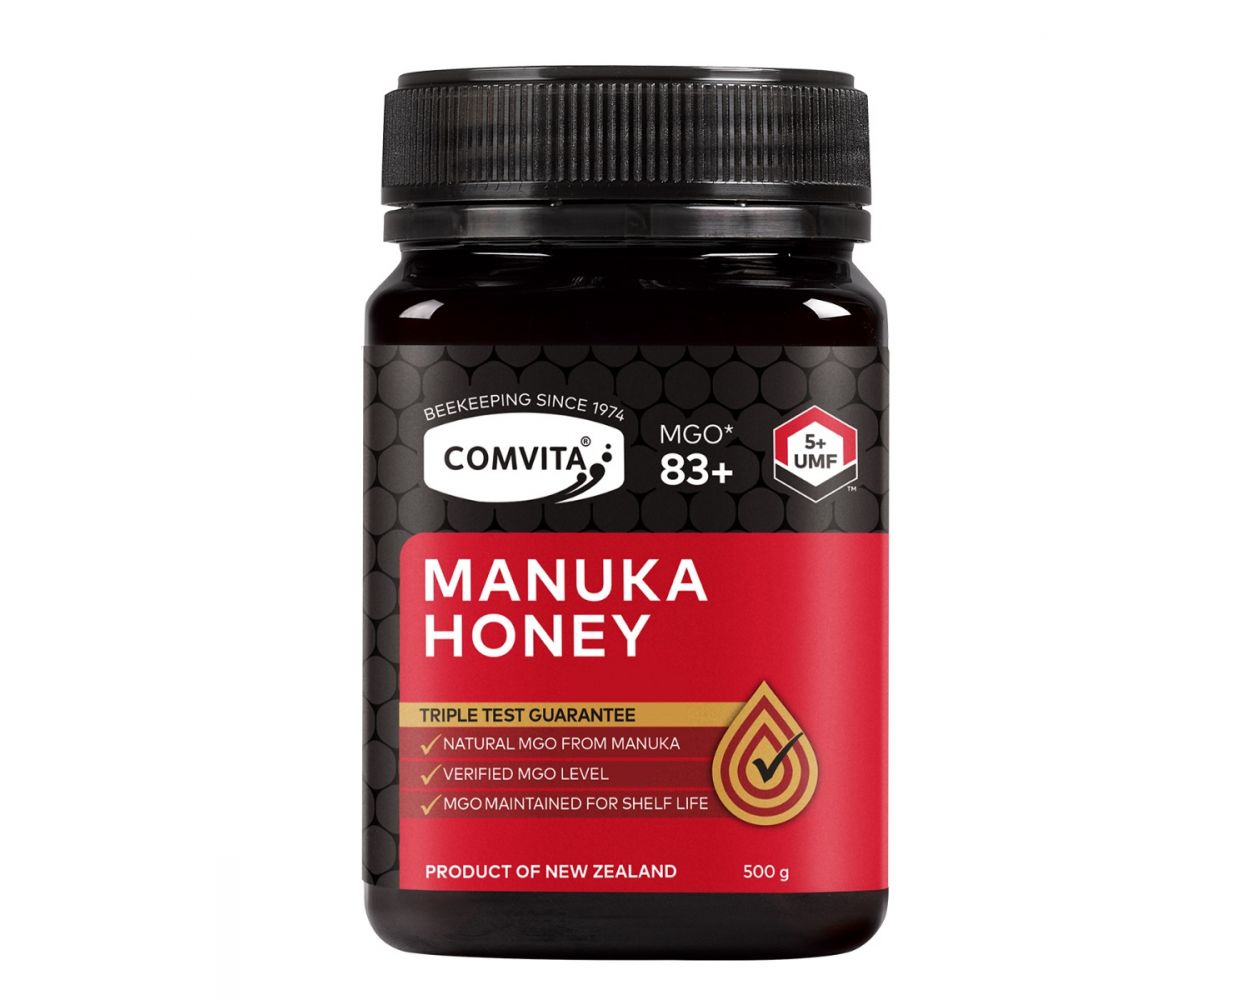 Comvita Manuka Honey UMF5+ 500g